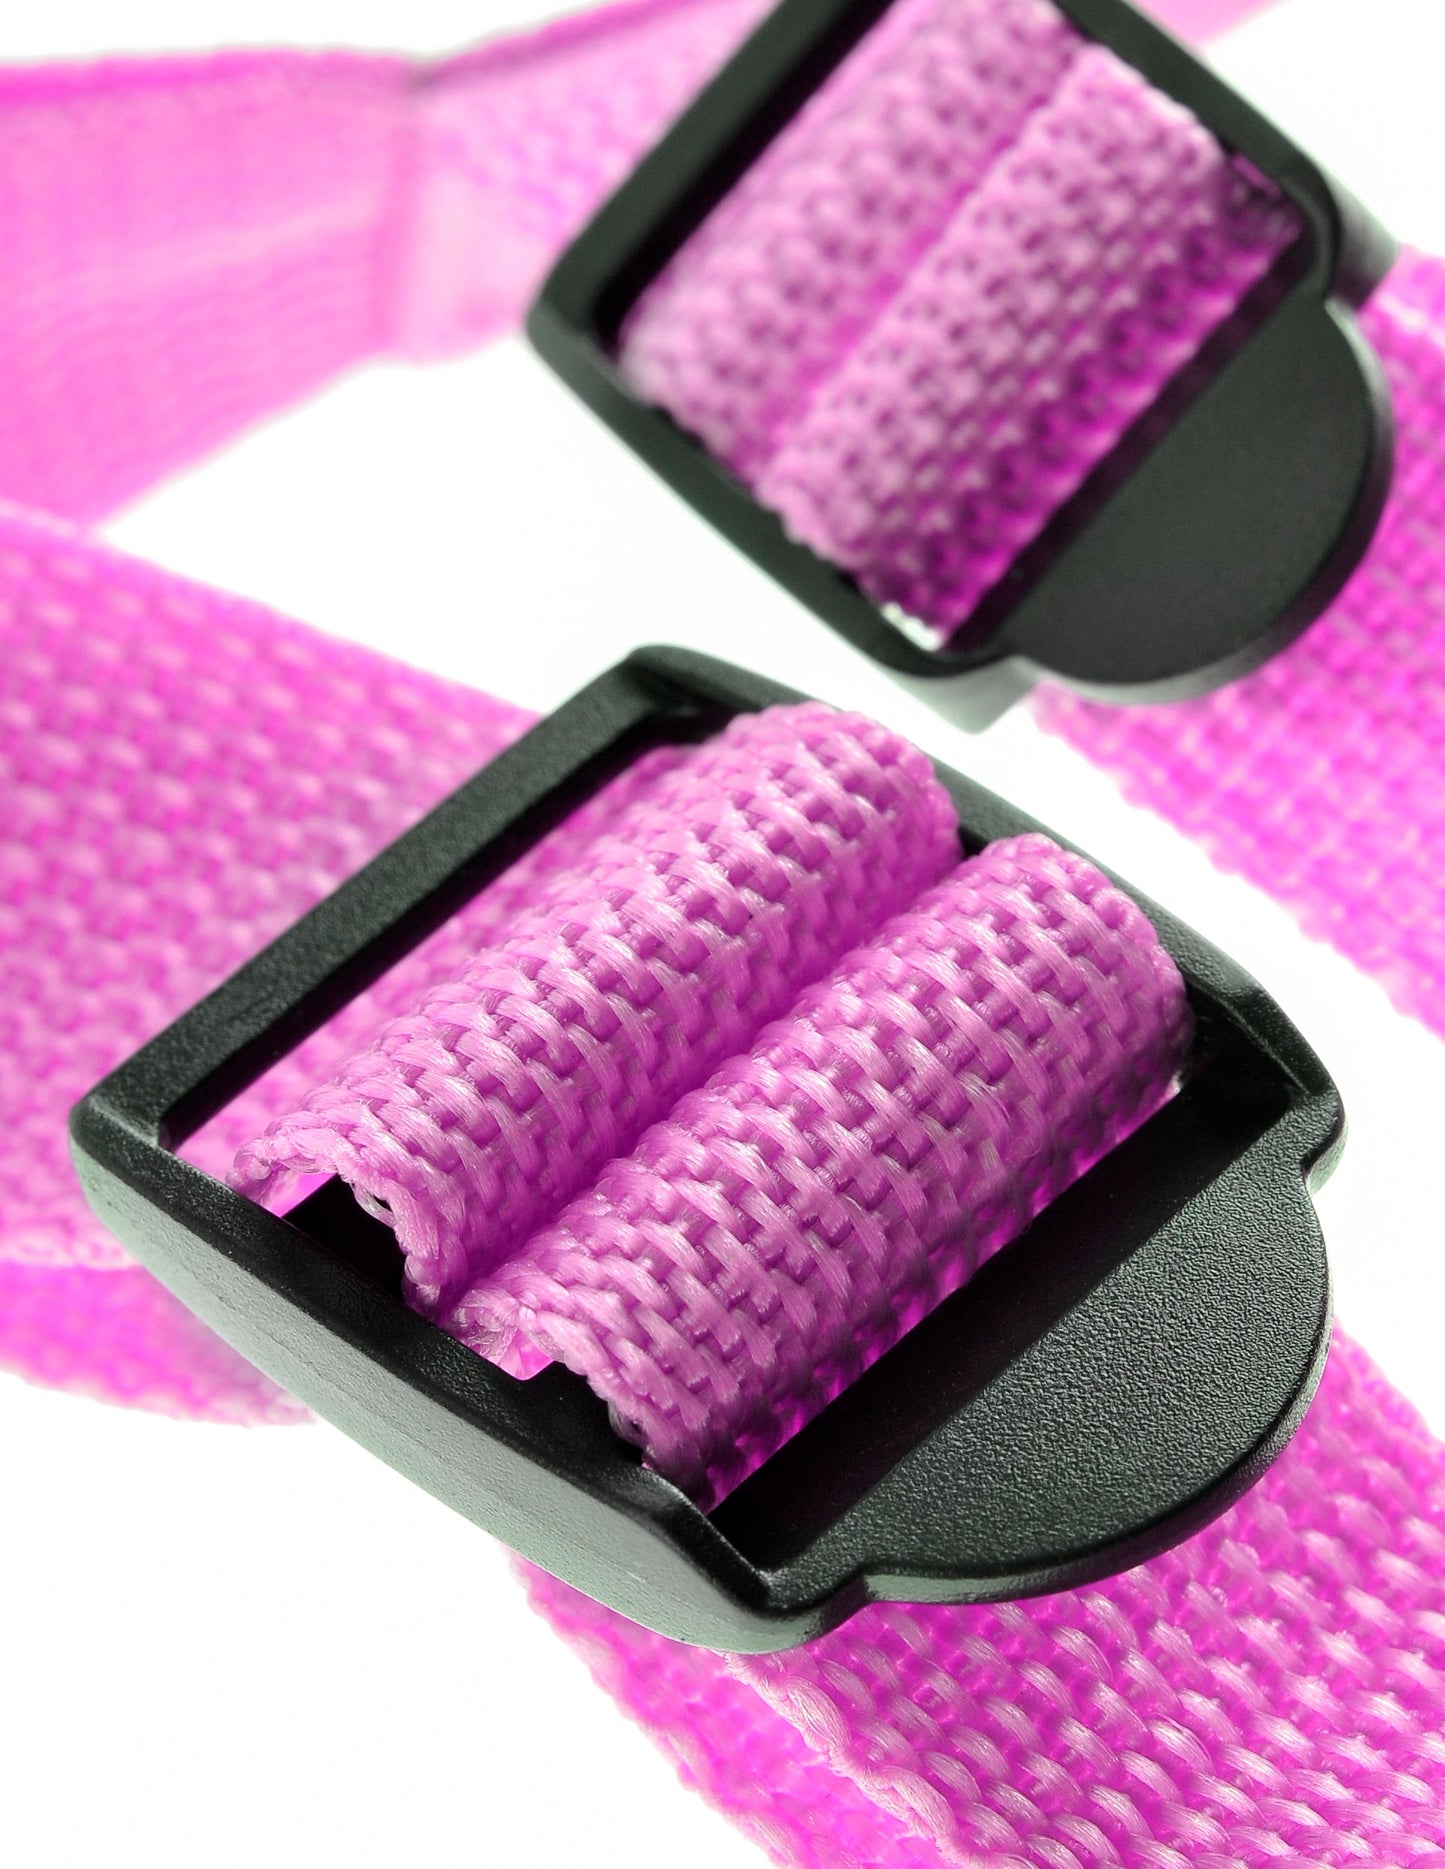 Dillio 7" Strap-On Pink Suspender Harness Set